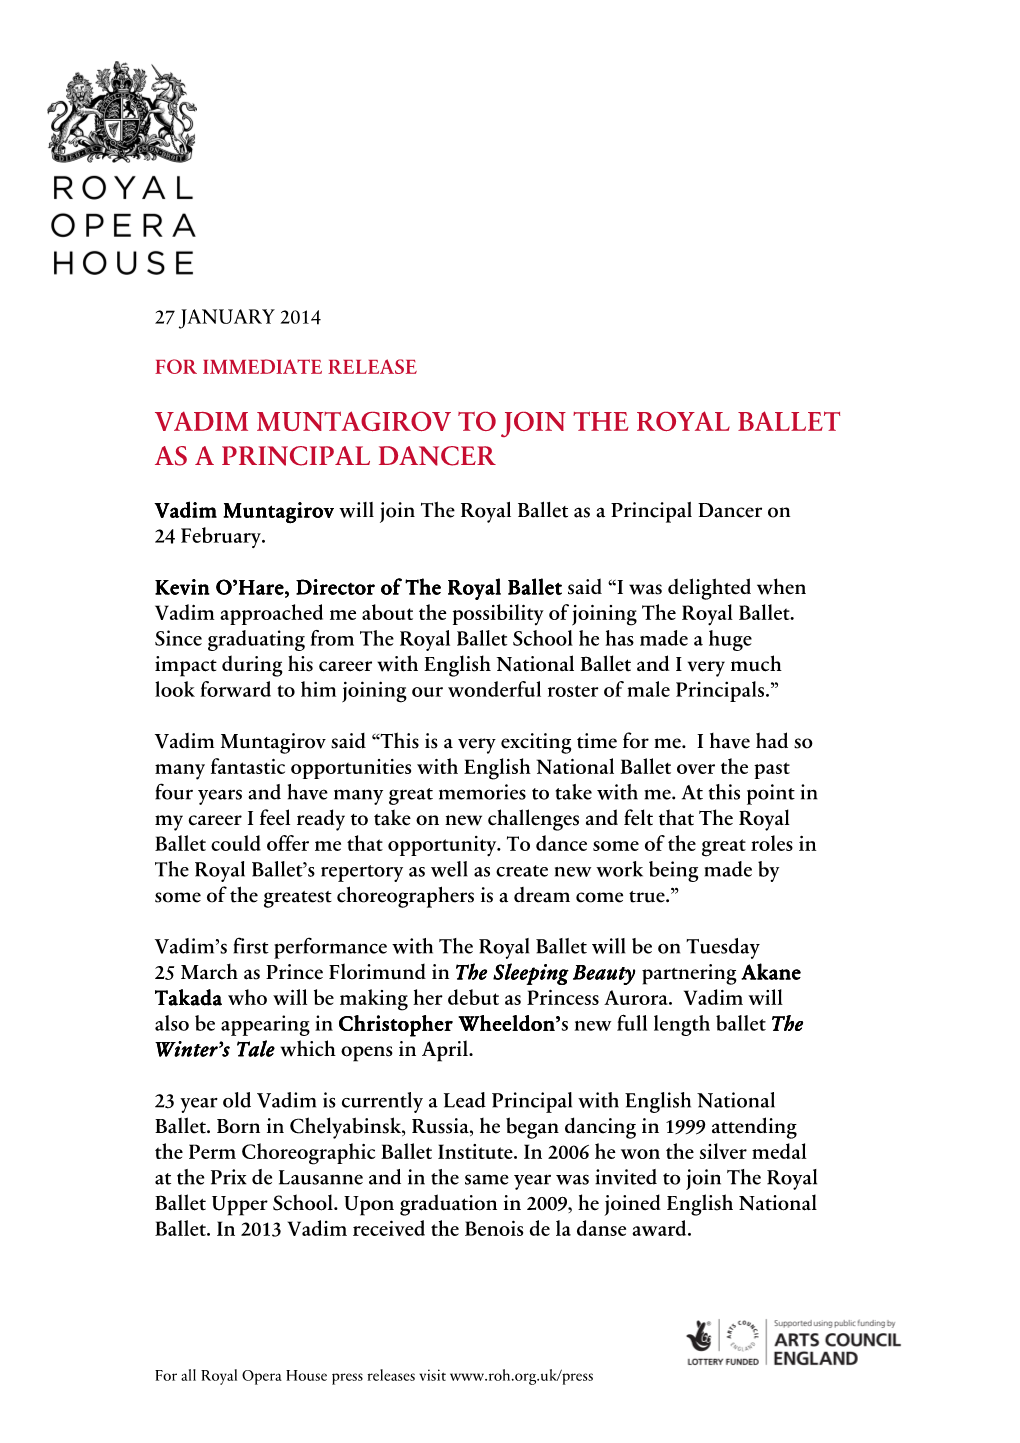 Vadim Muntagirov to Join the Royal Ballet As a Principal Dancer